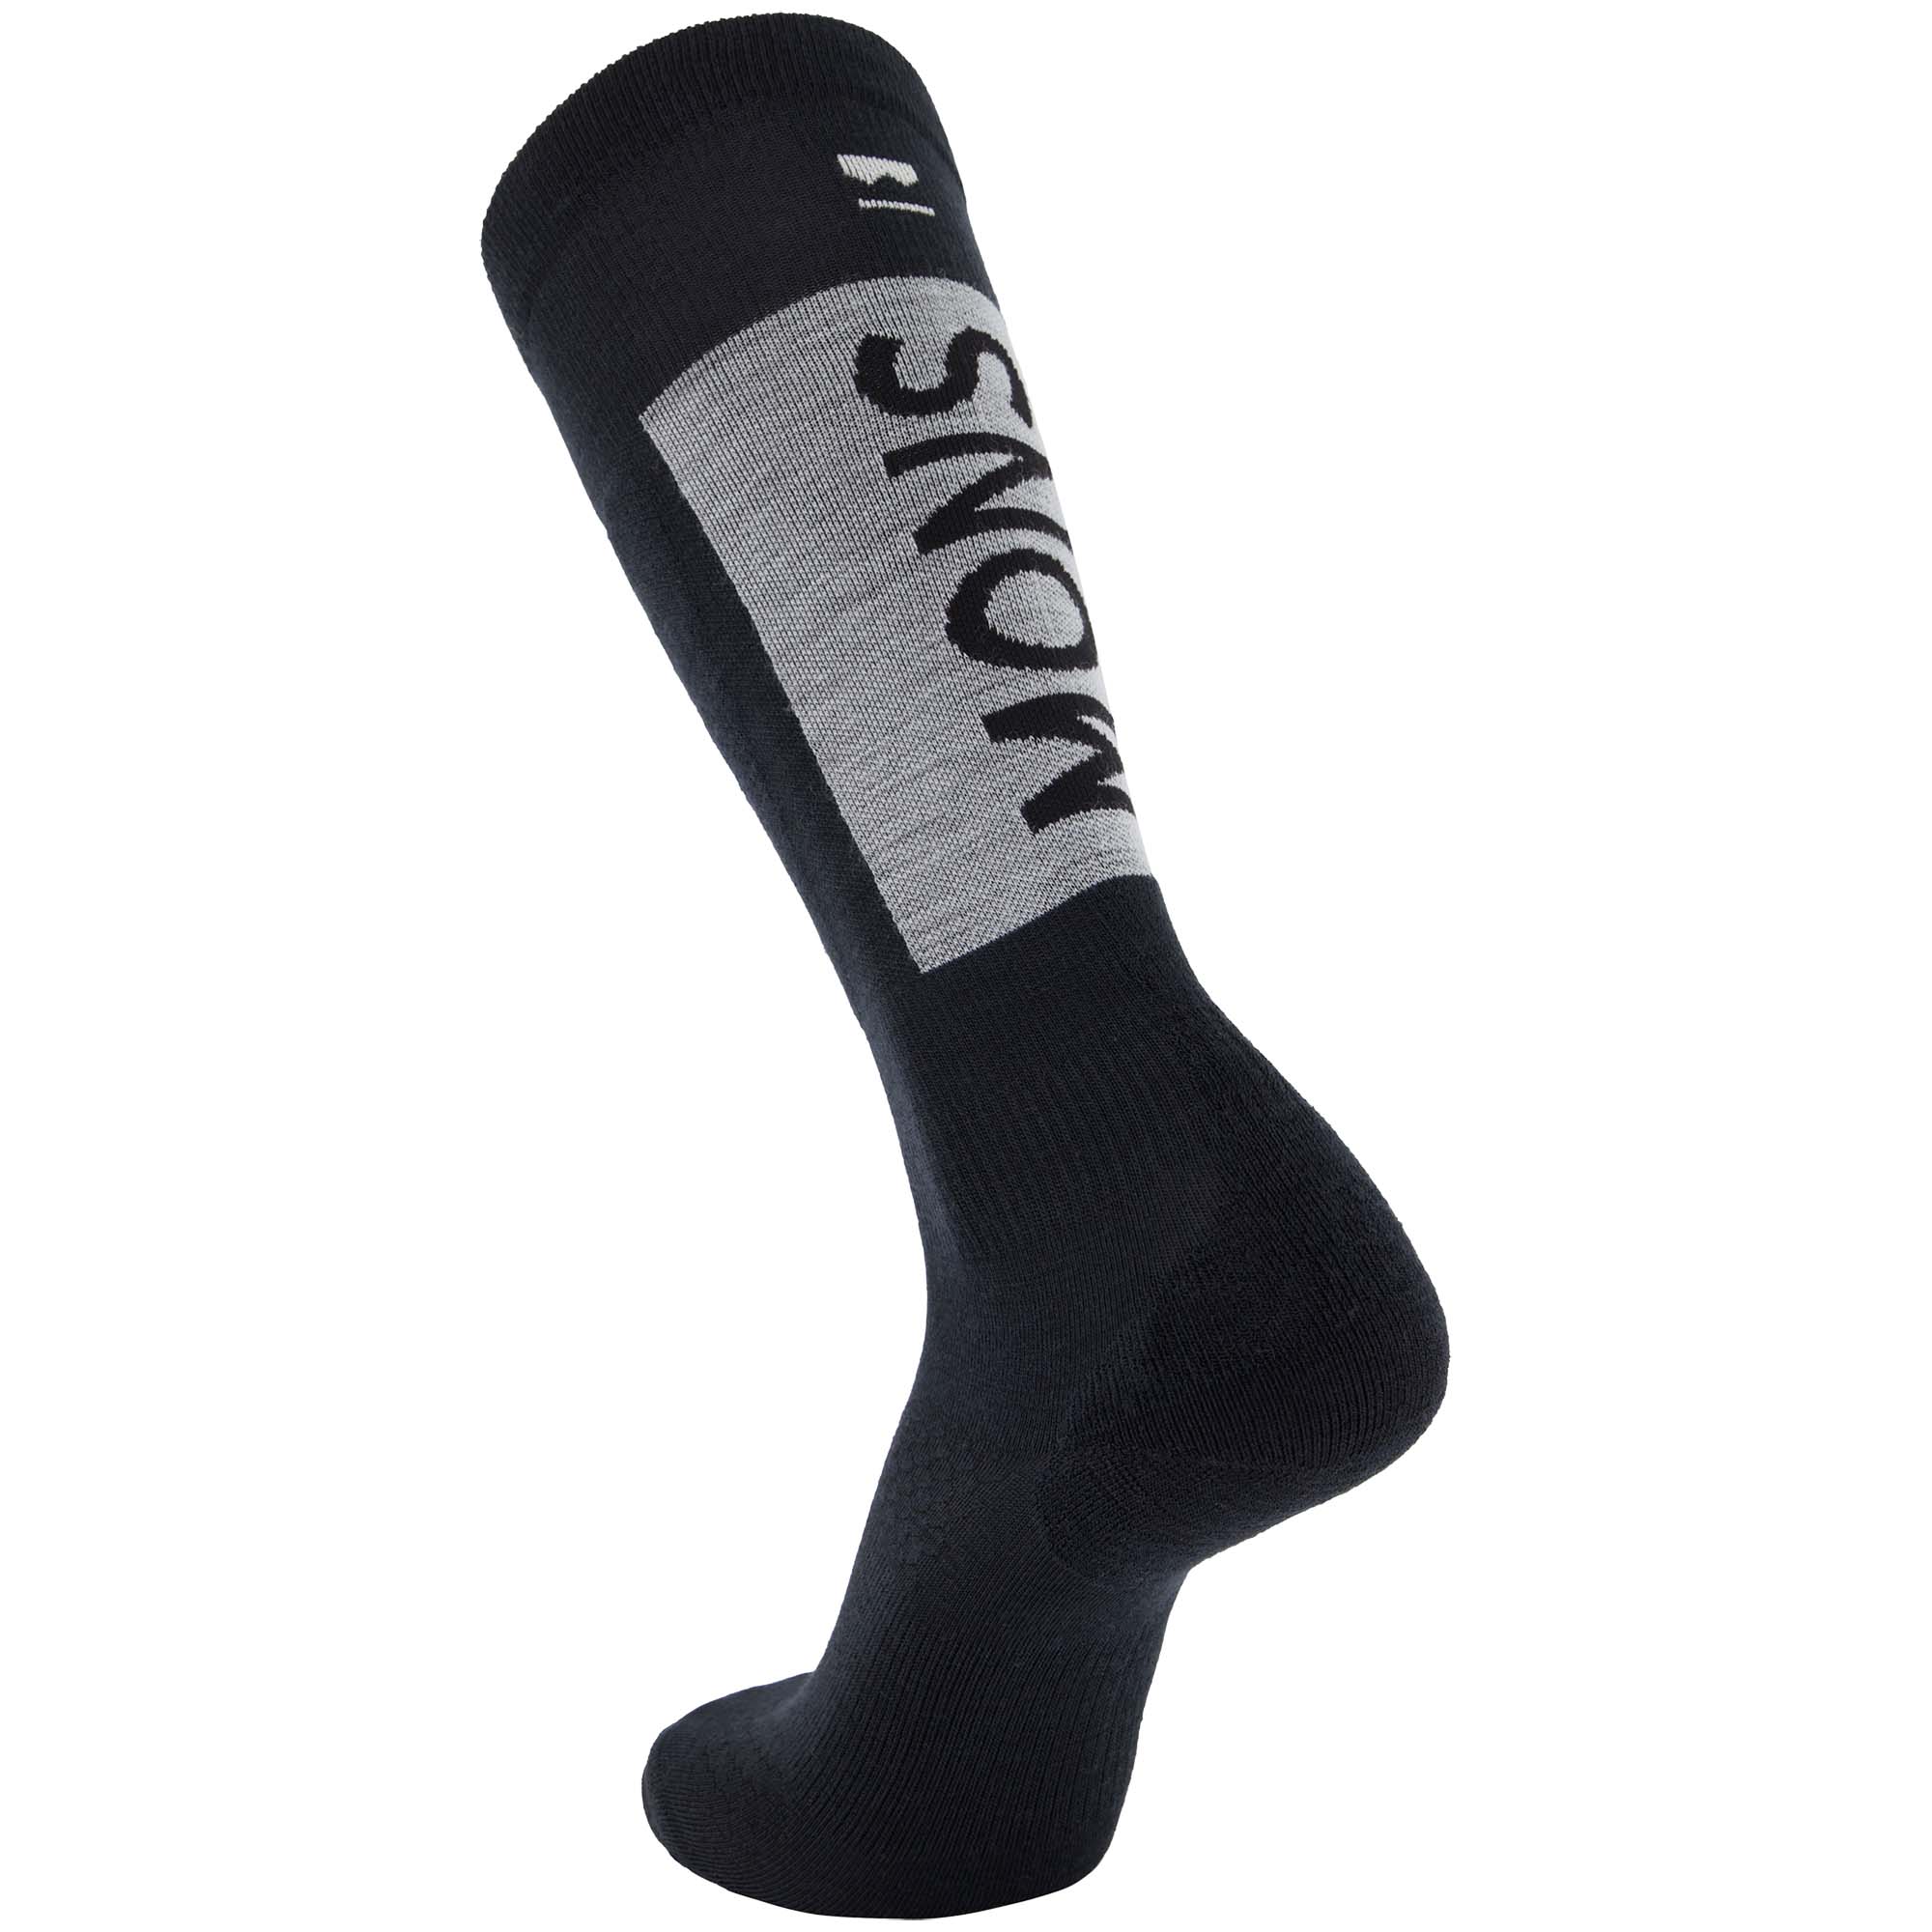 Mons Royale Atlas Merino Unisex Ski/Snowboard Socks